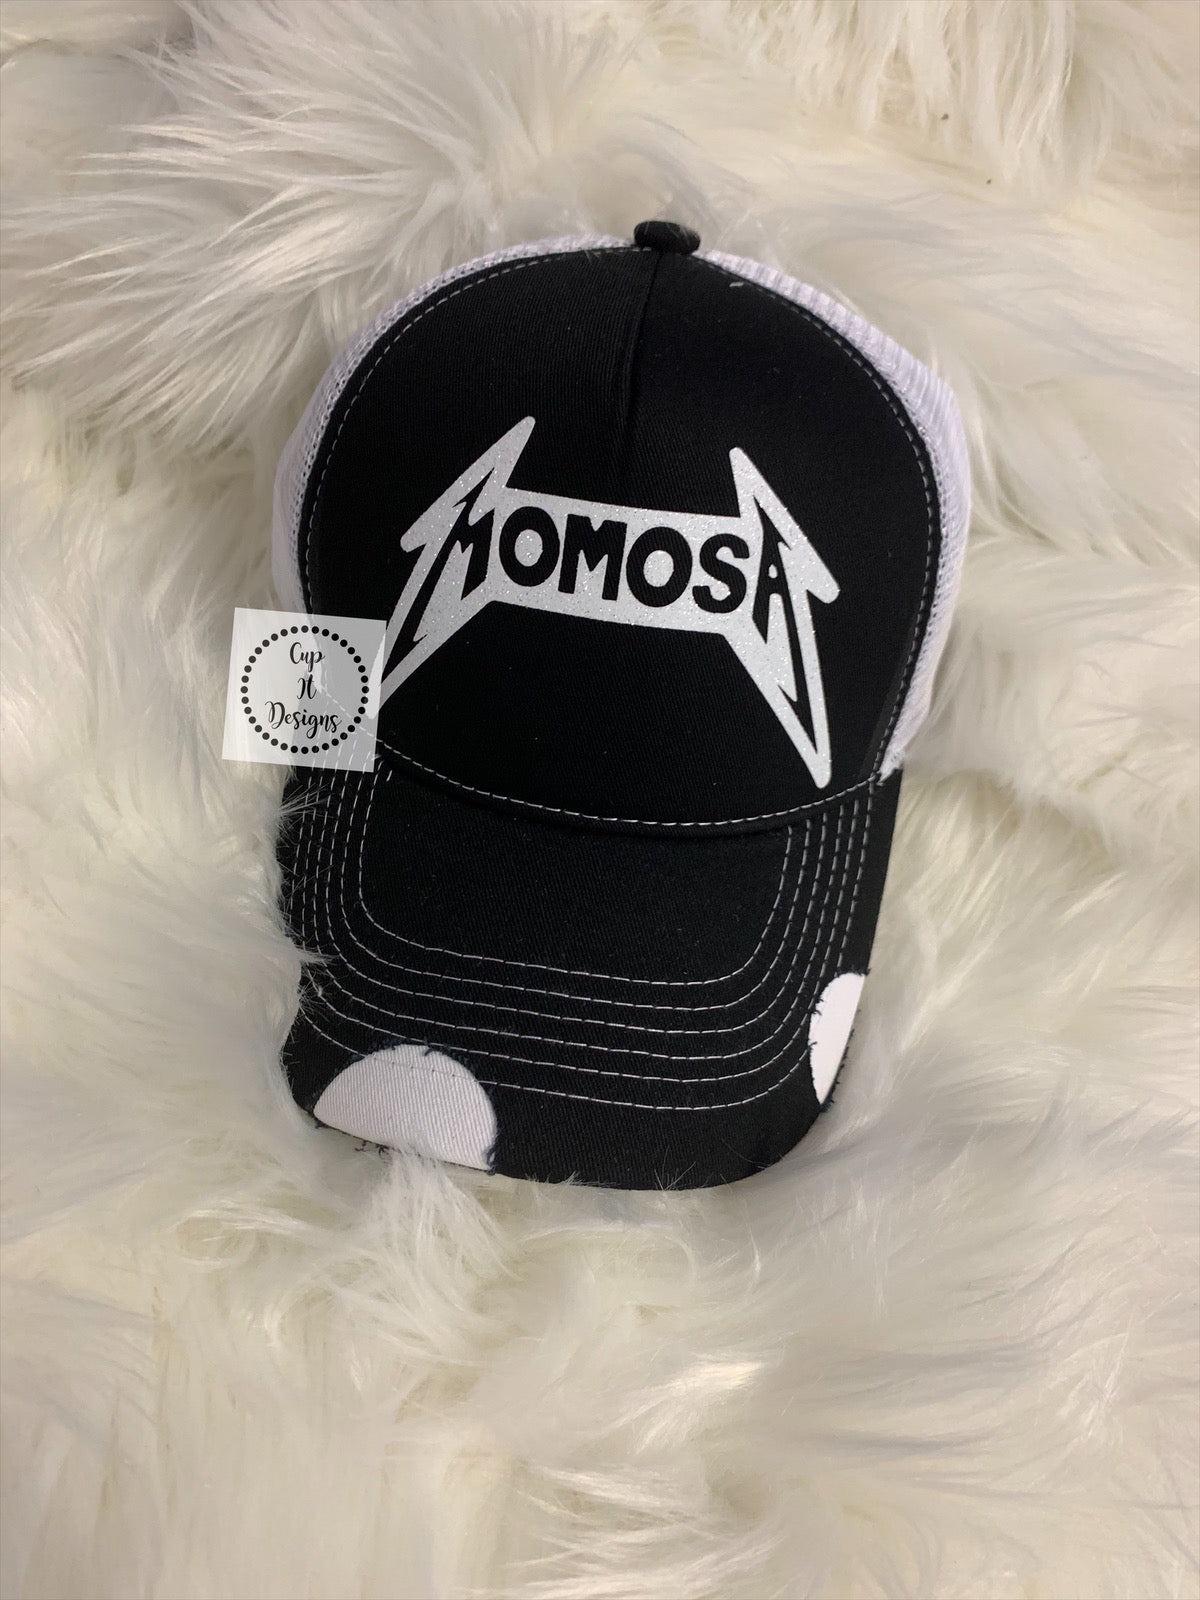 Black Distressed MIMOSA/MOMOSA Trucker Hat